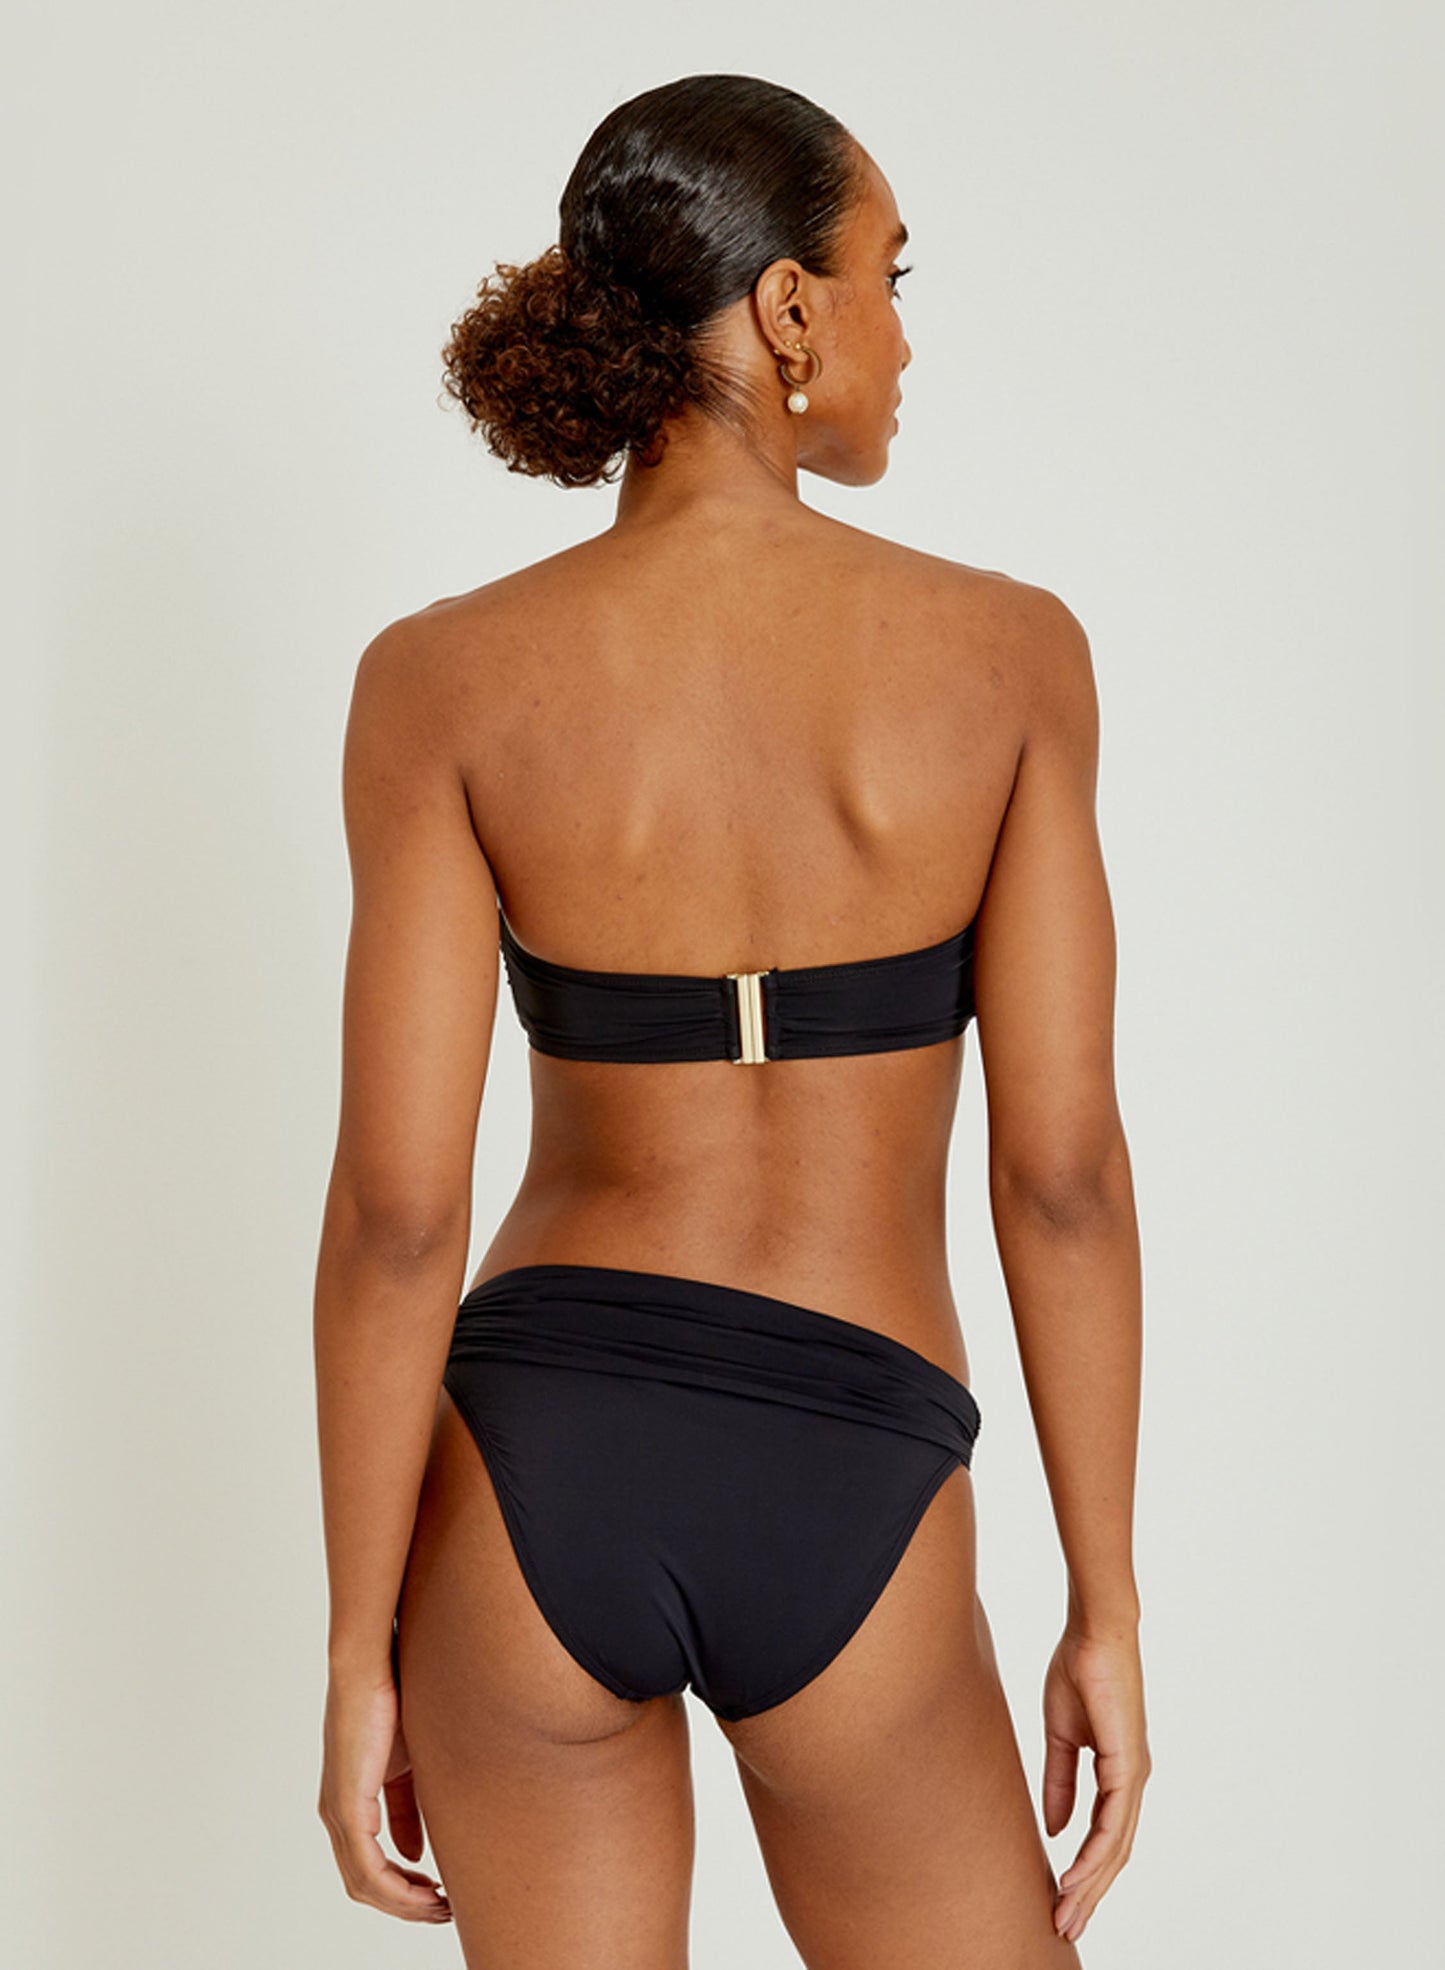 Lenny Drop Bandeau Bikini Top - Premium Swimsuit from Marina St Barth - Just $175! Shop now at Marina St Barth